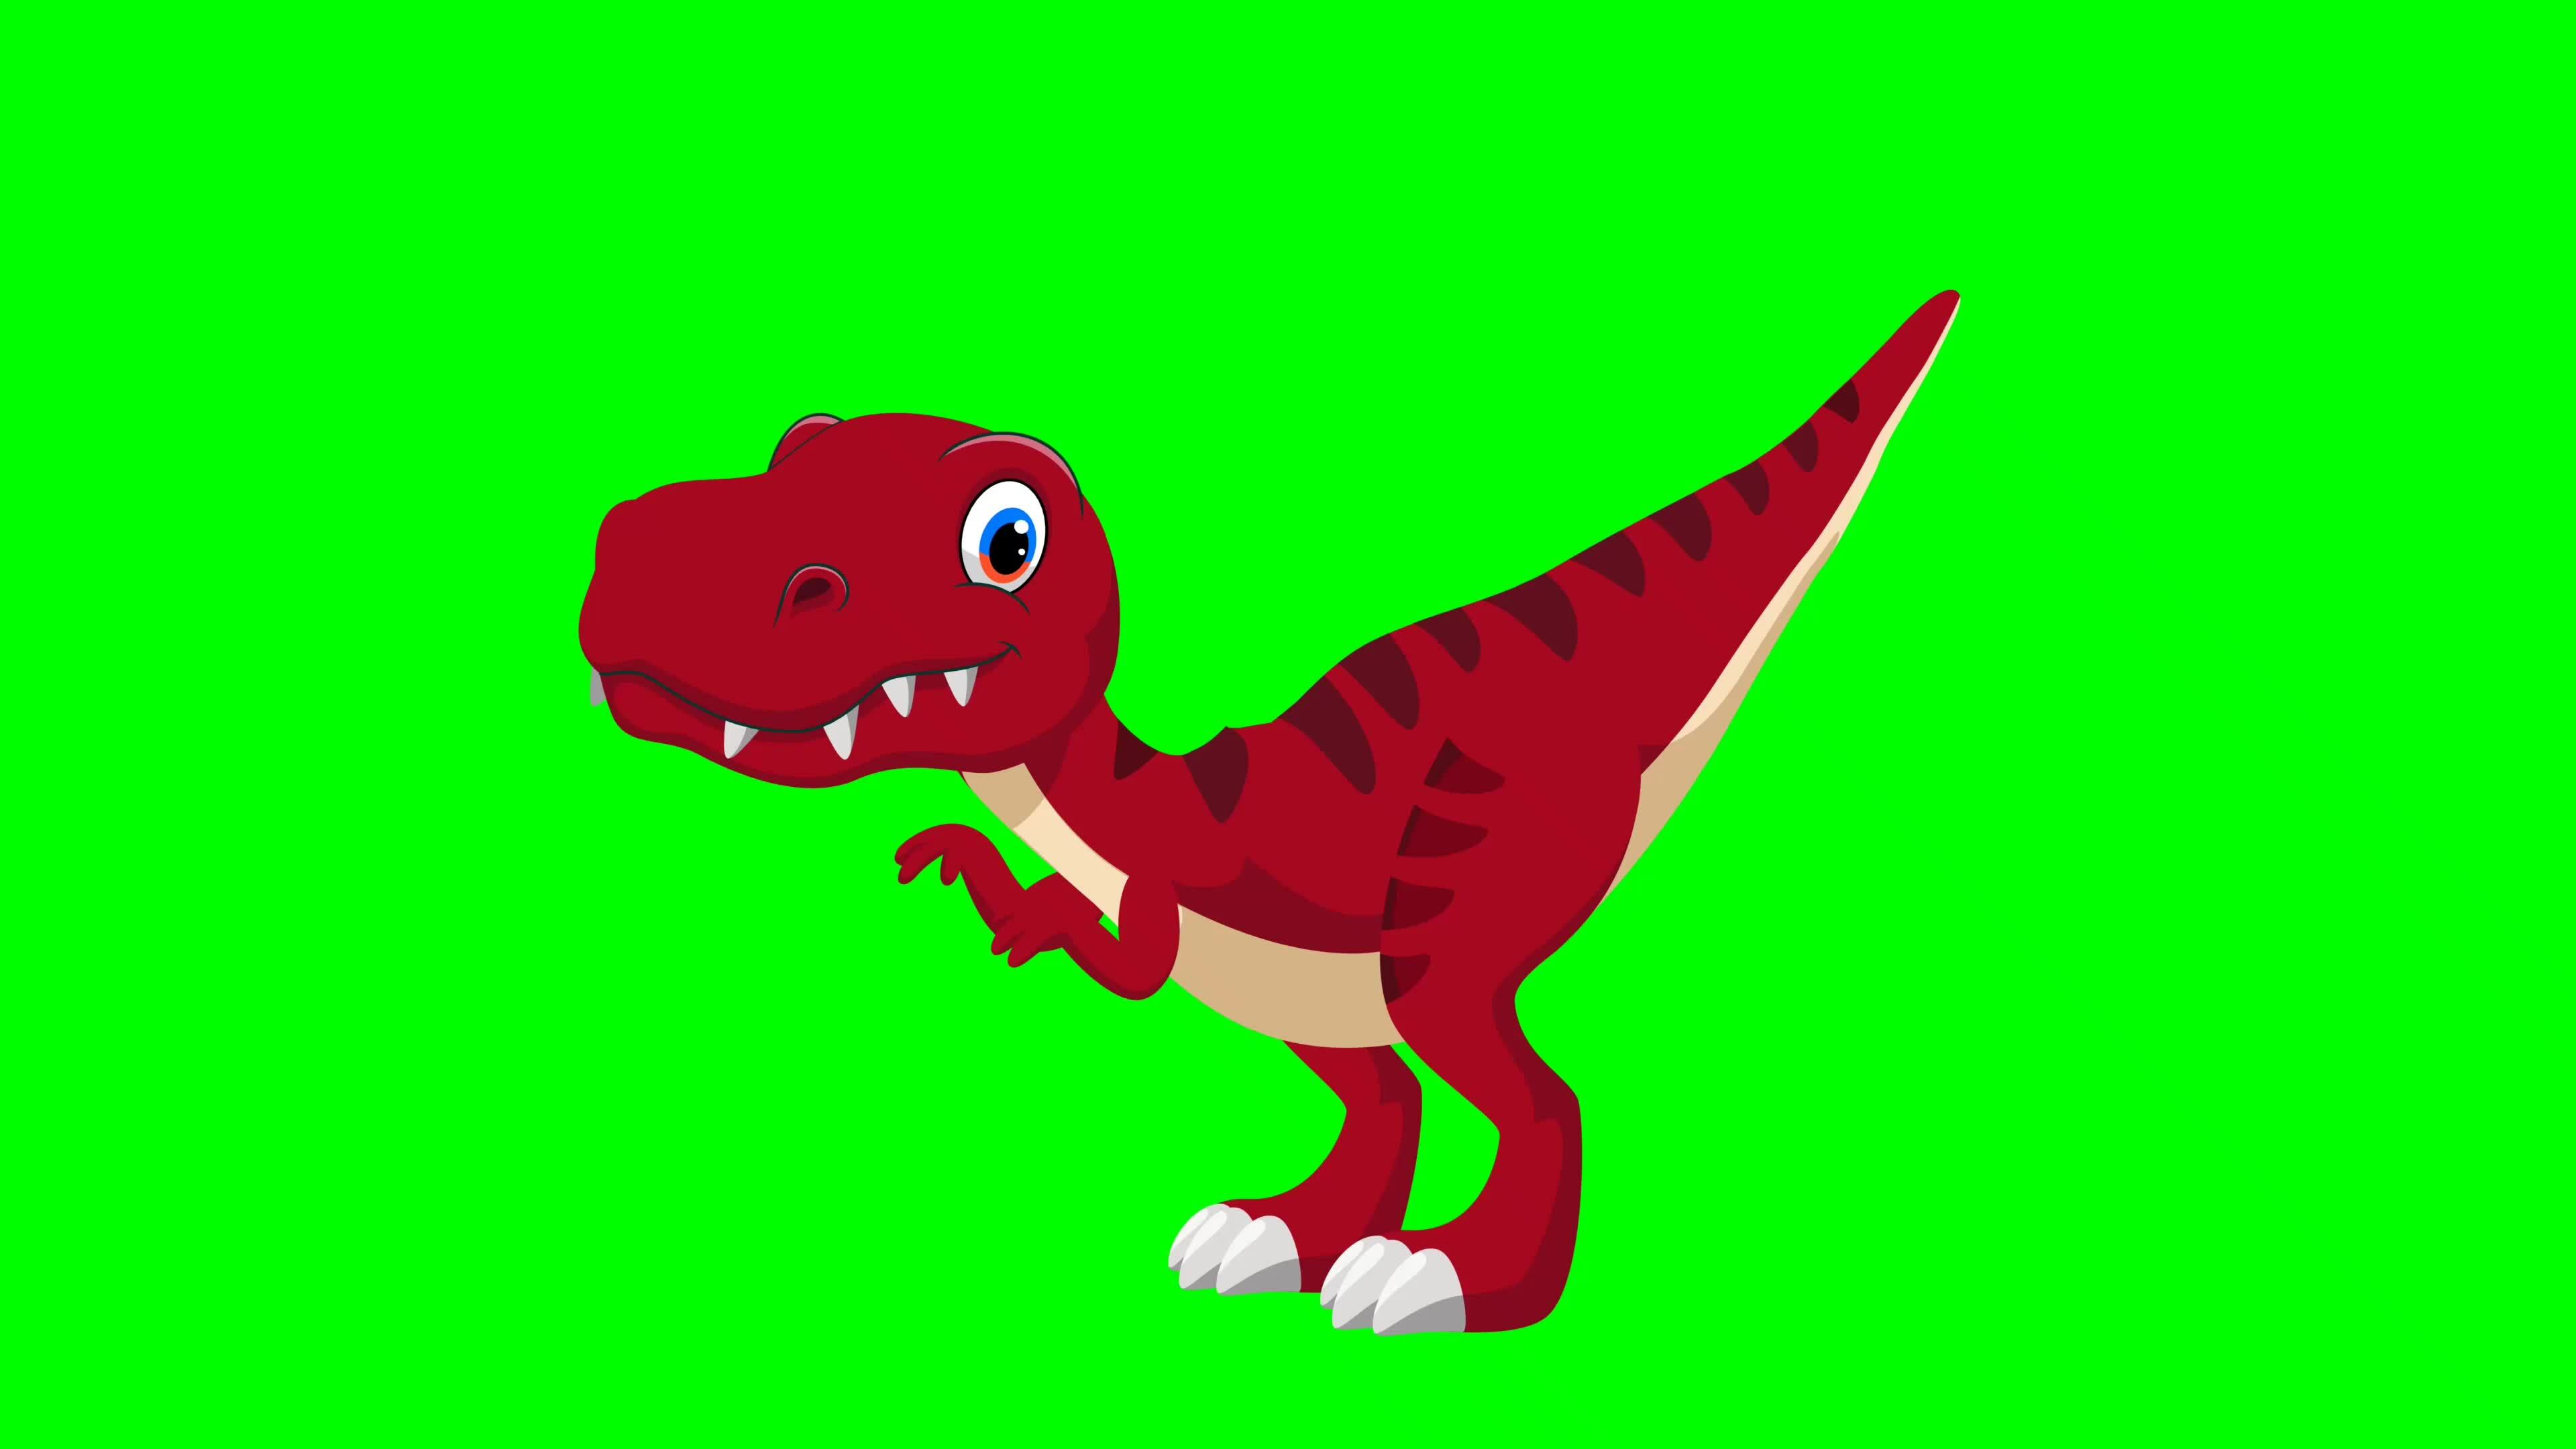 Tyrannosaurus T-Rex Run Green Screen 3D , Stock Video